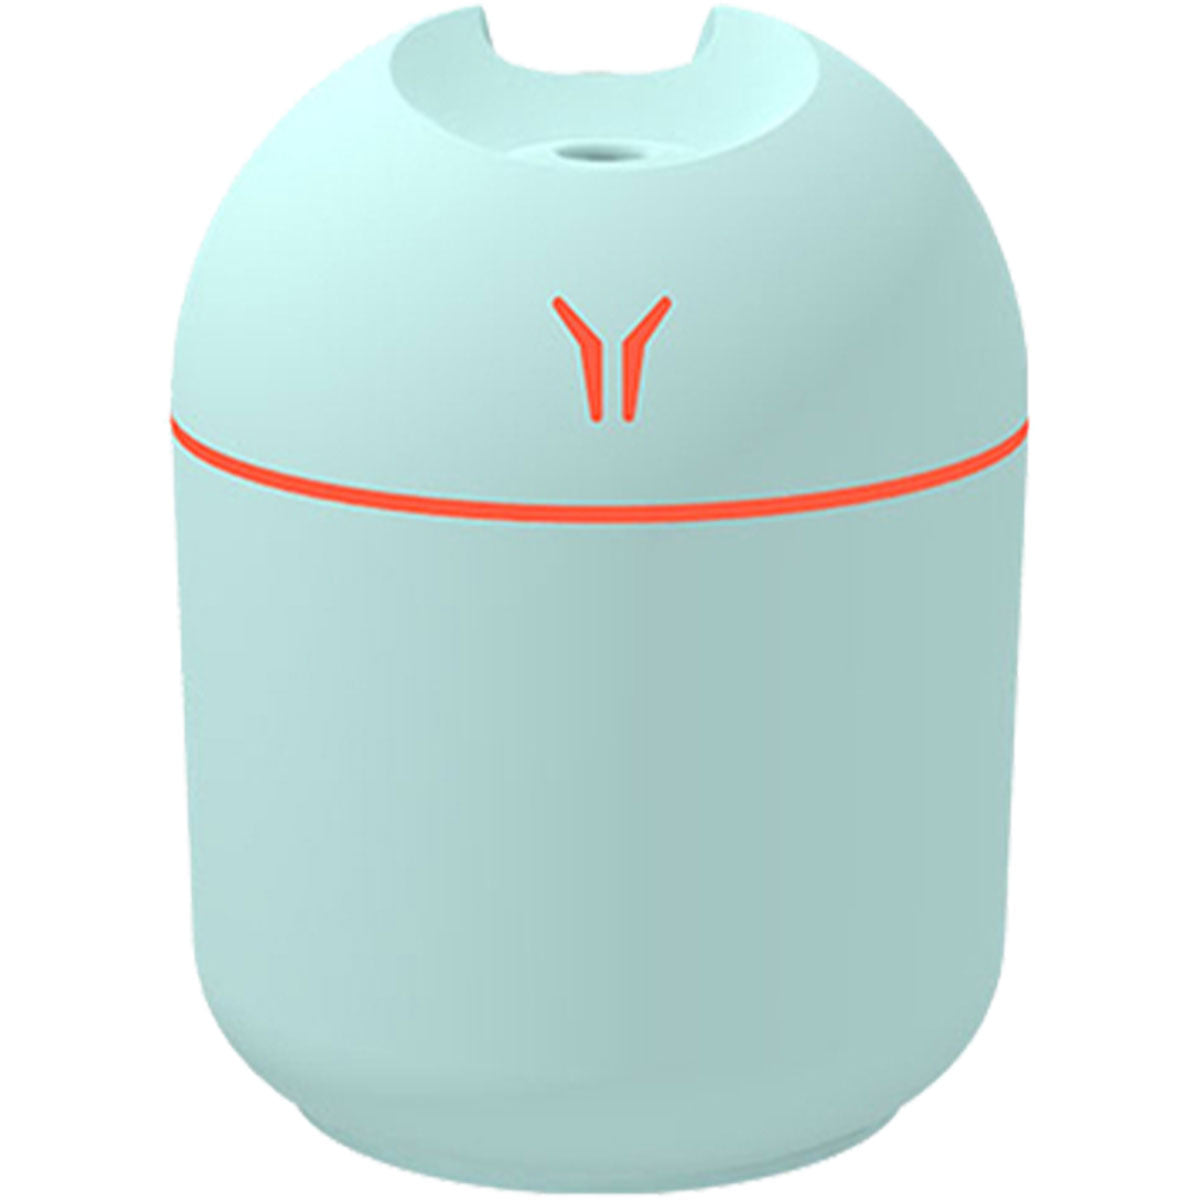 USB Air Humidifier Portable Diffuser Aromatherapy Sprayer 250ML